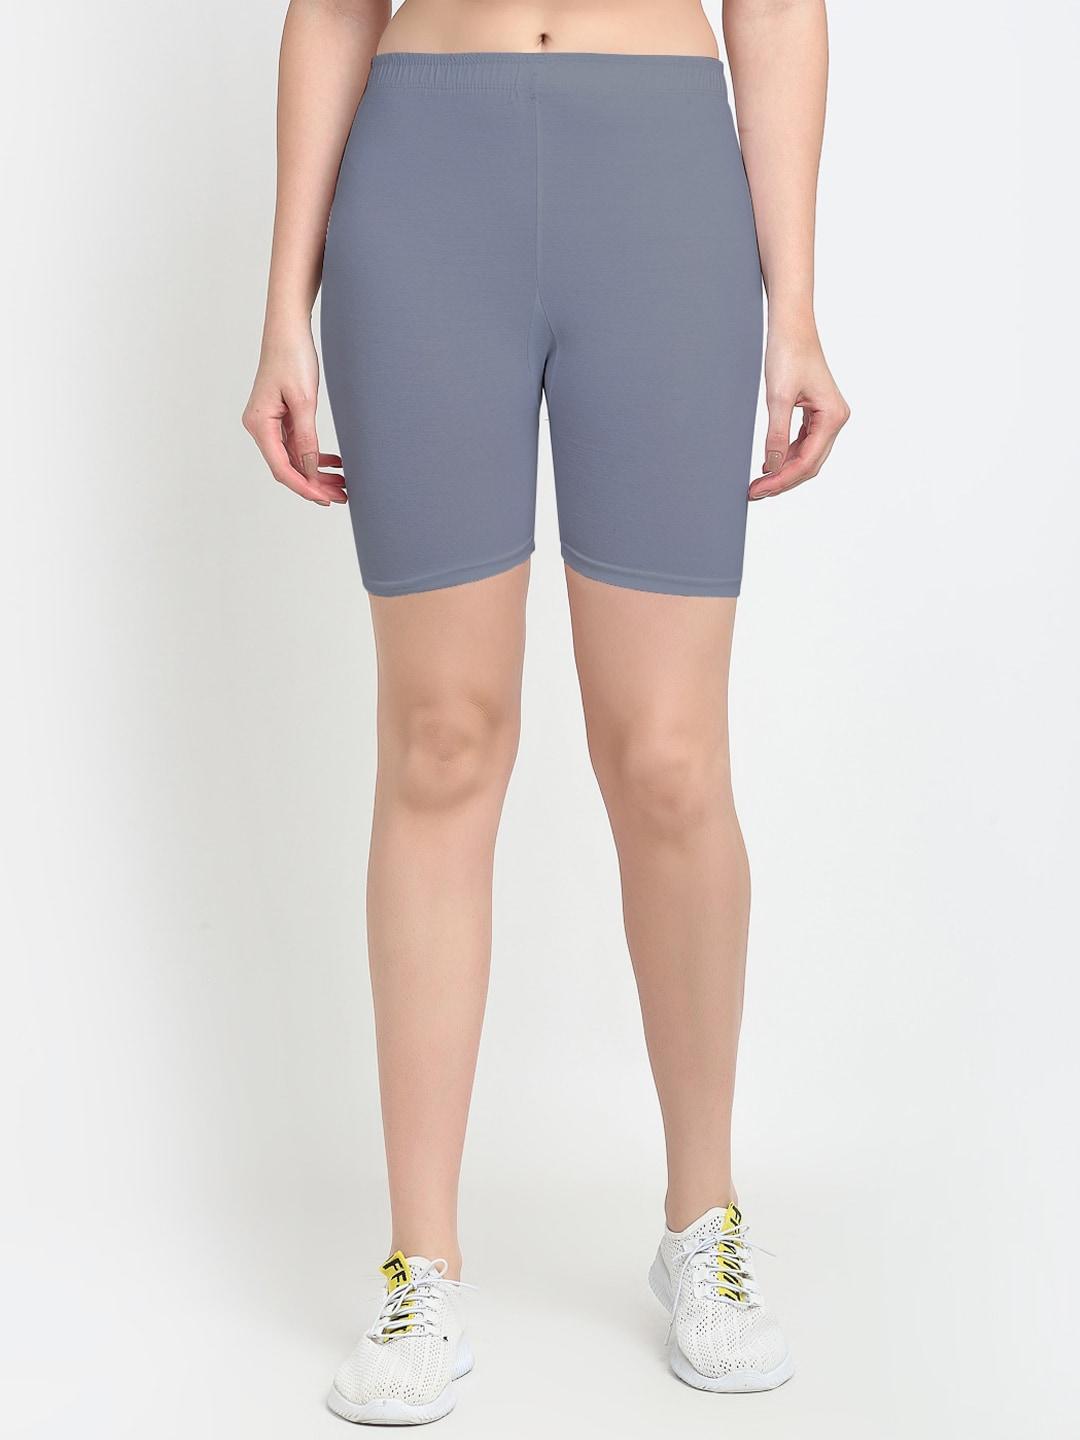 gracit-women-grey-cycling-sports-shorts